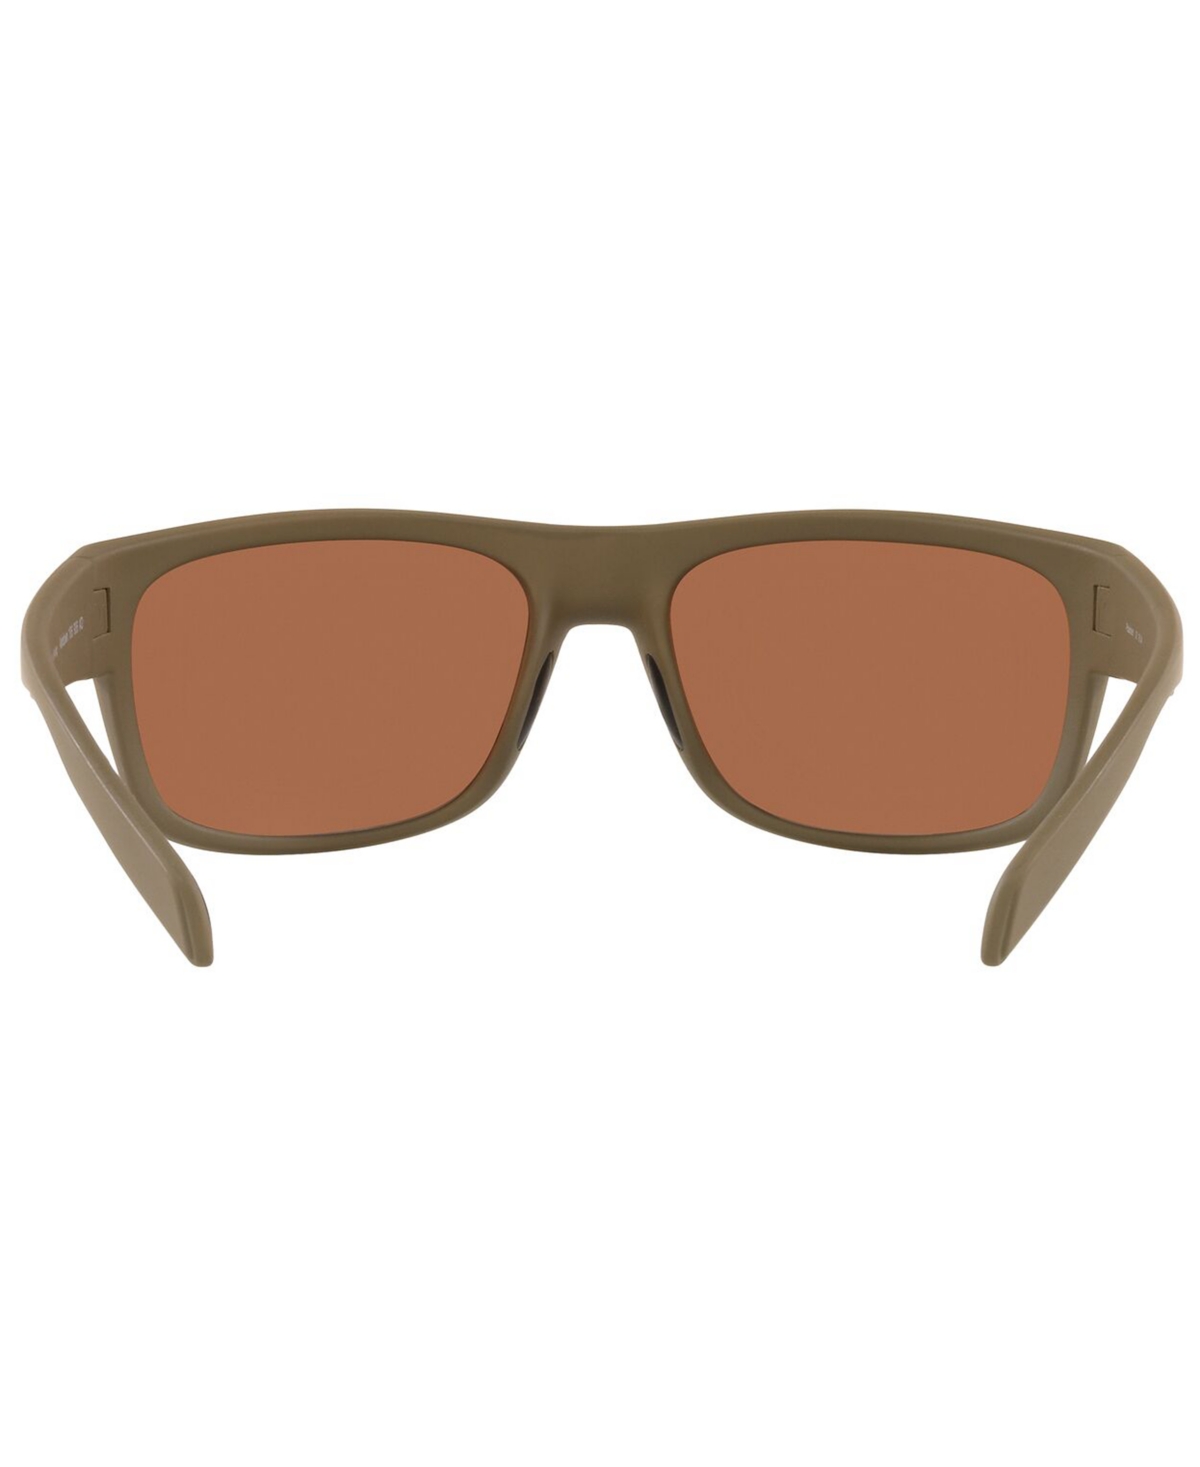 Shop Native Eyewear Native Unisex Polarized Sunglasses, Xd9003 58 In Wood,brown